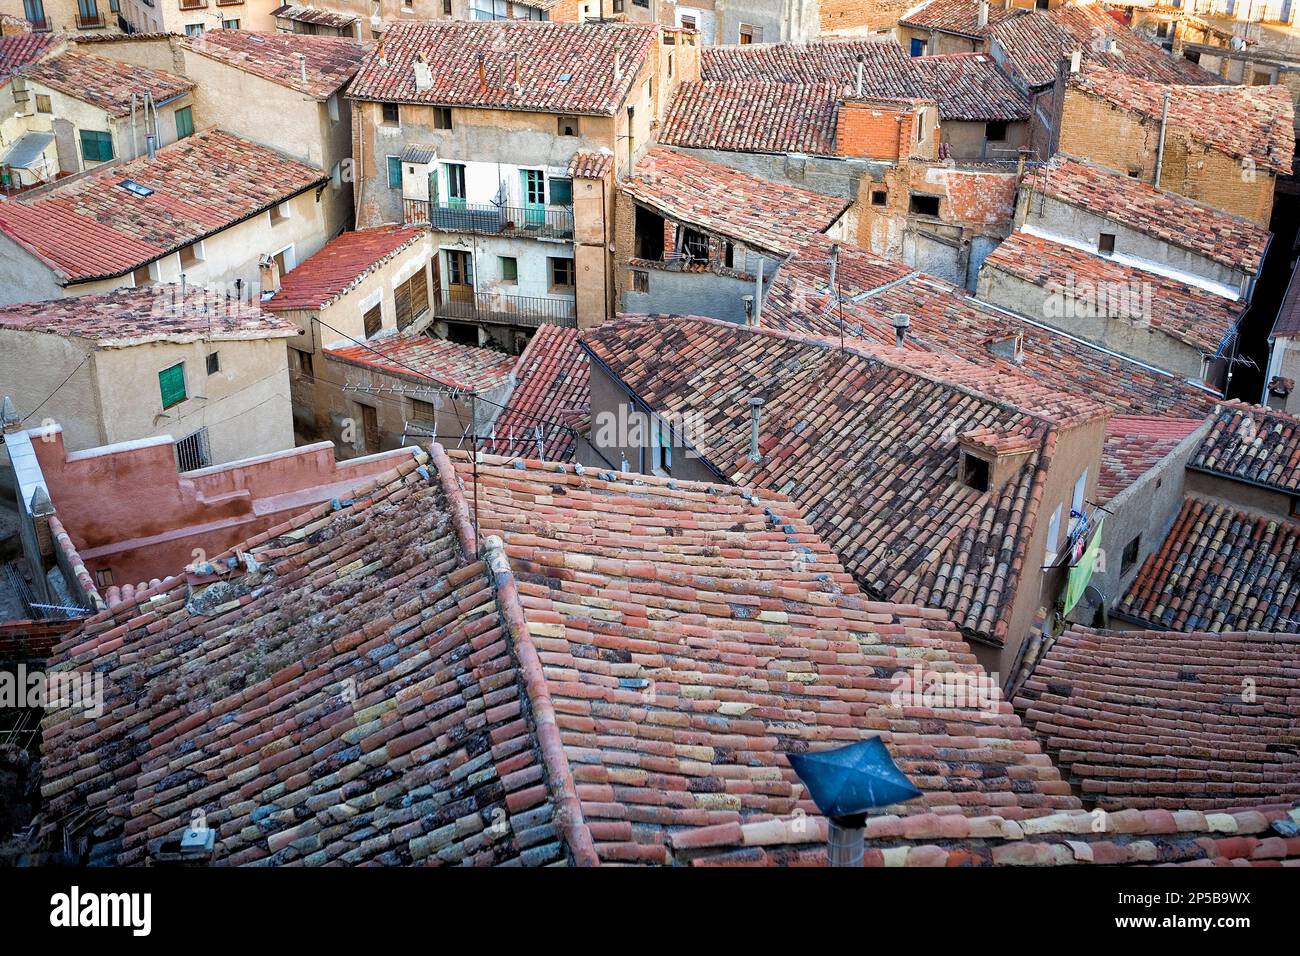 Spain, Zaragoza province,Daroca: Rooftops Stock Photo